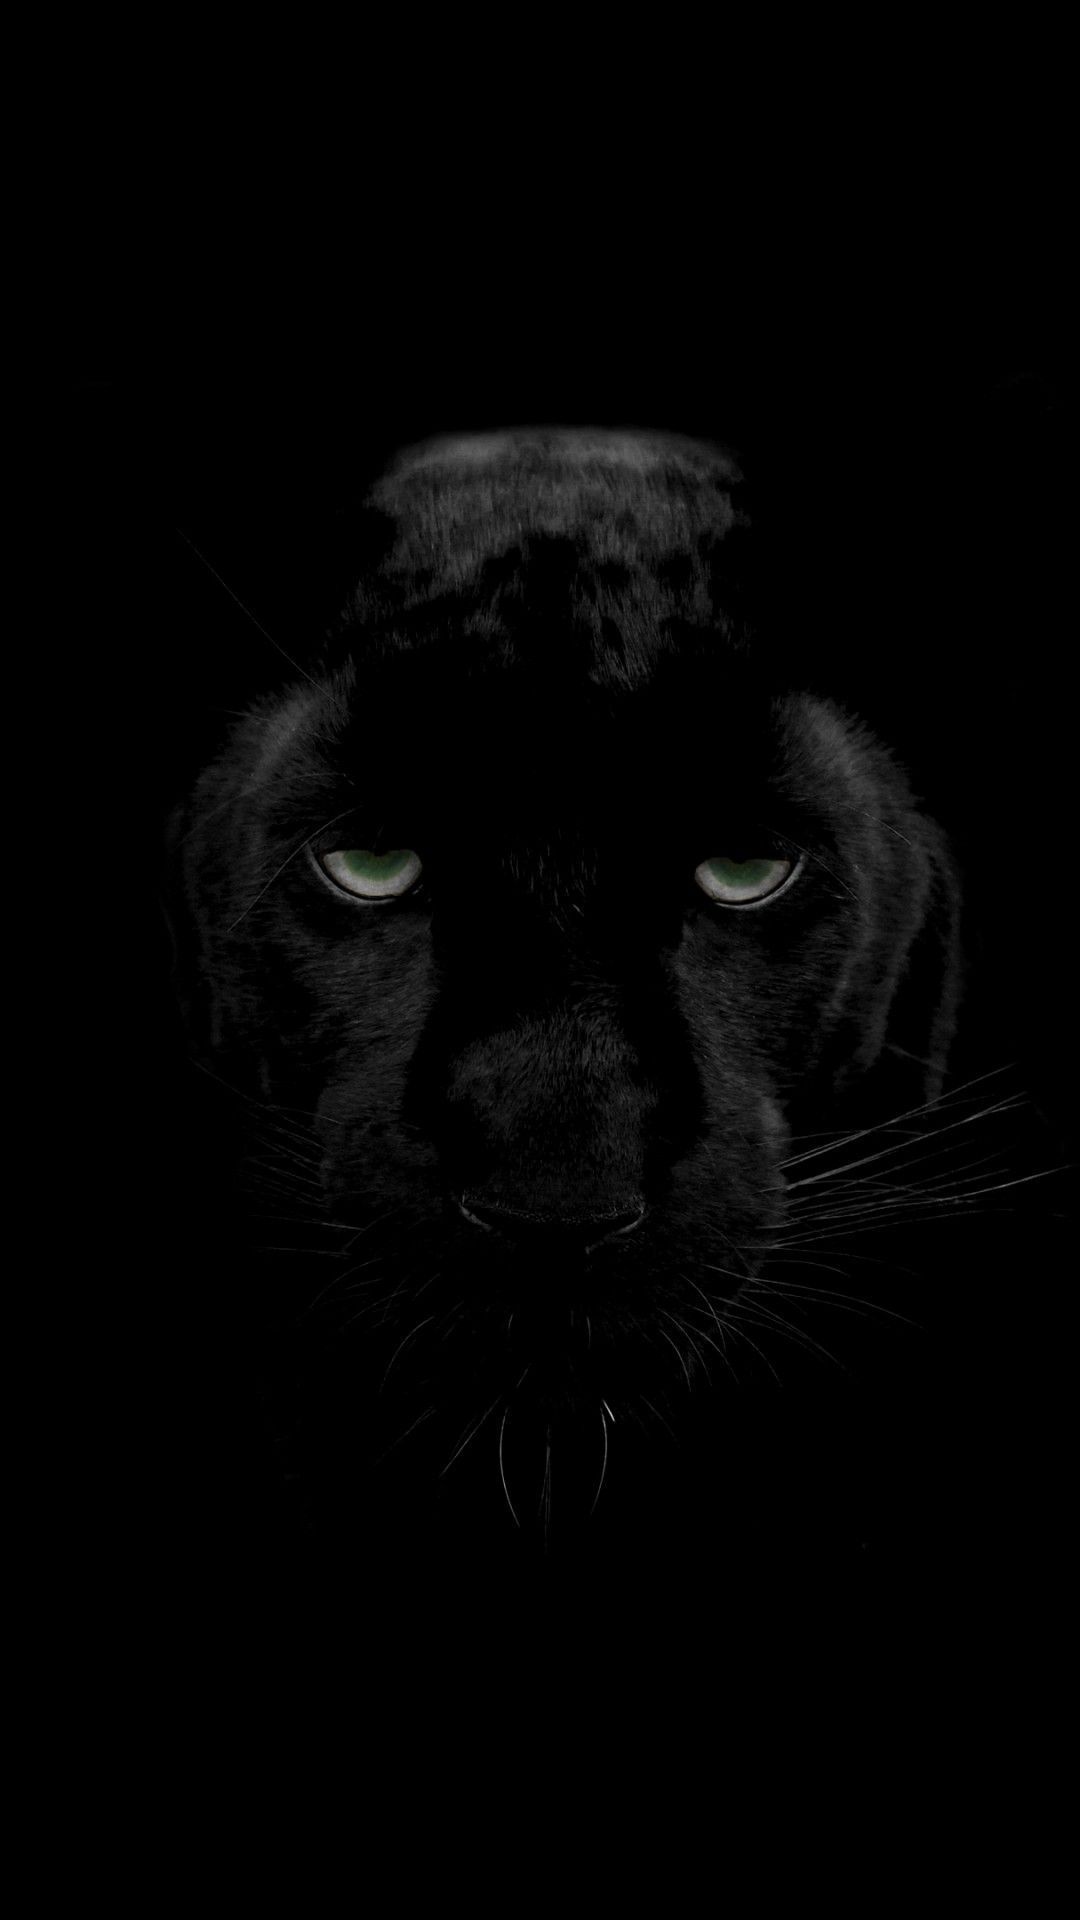 Black Panther Wallpaper 4k iPhoneD Wallpaper. Animal wallpaper, Black wallpaper, Panther